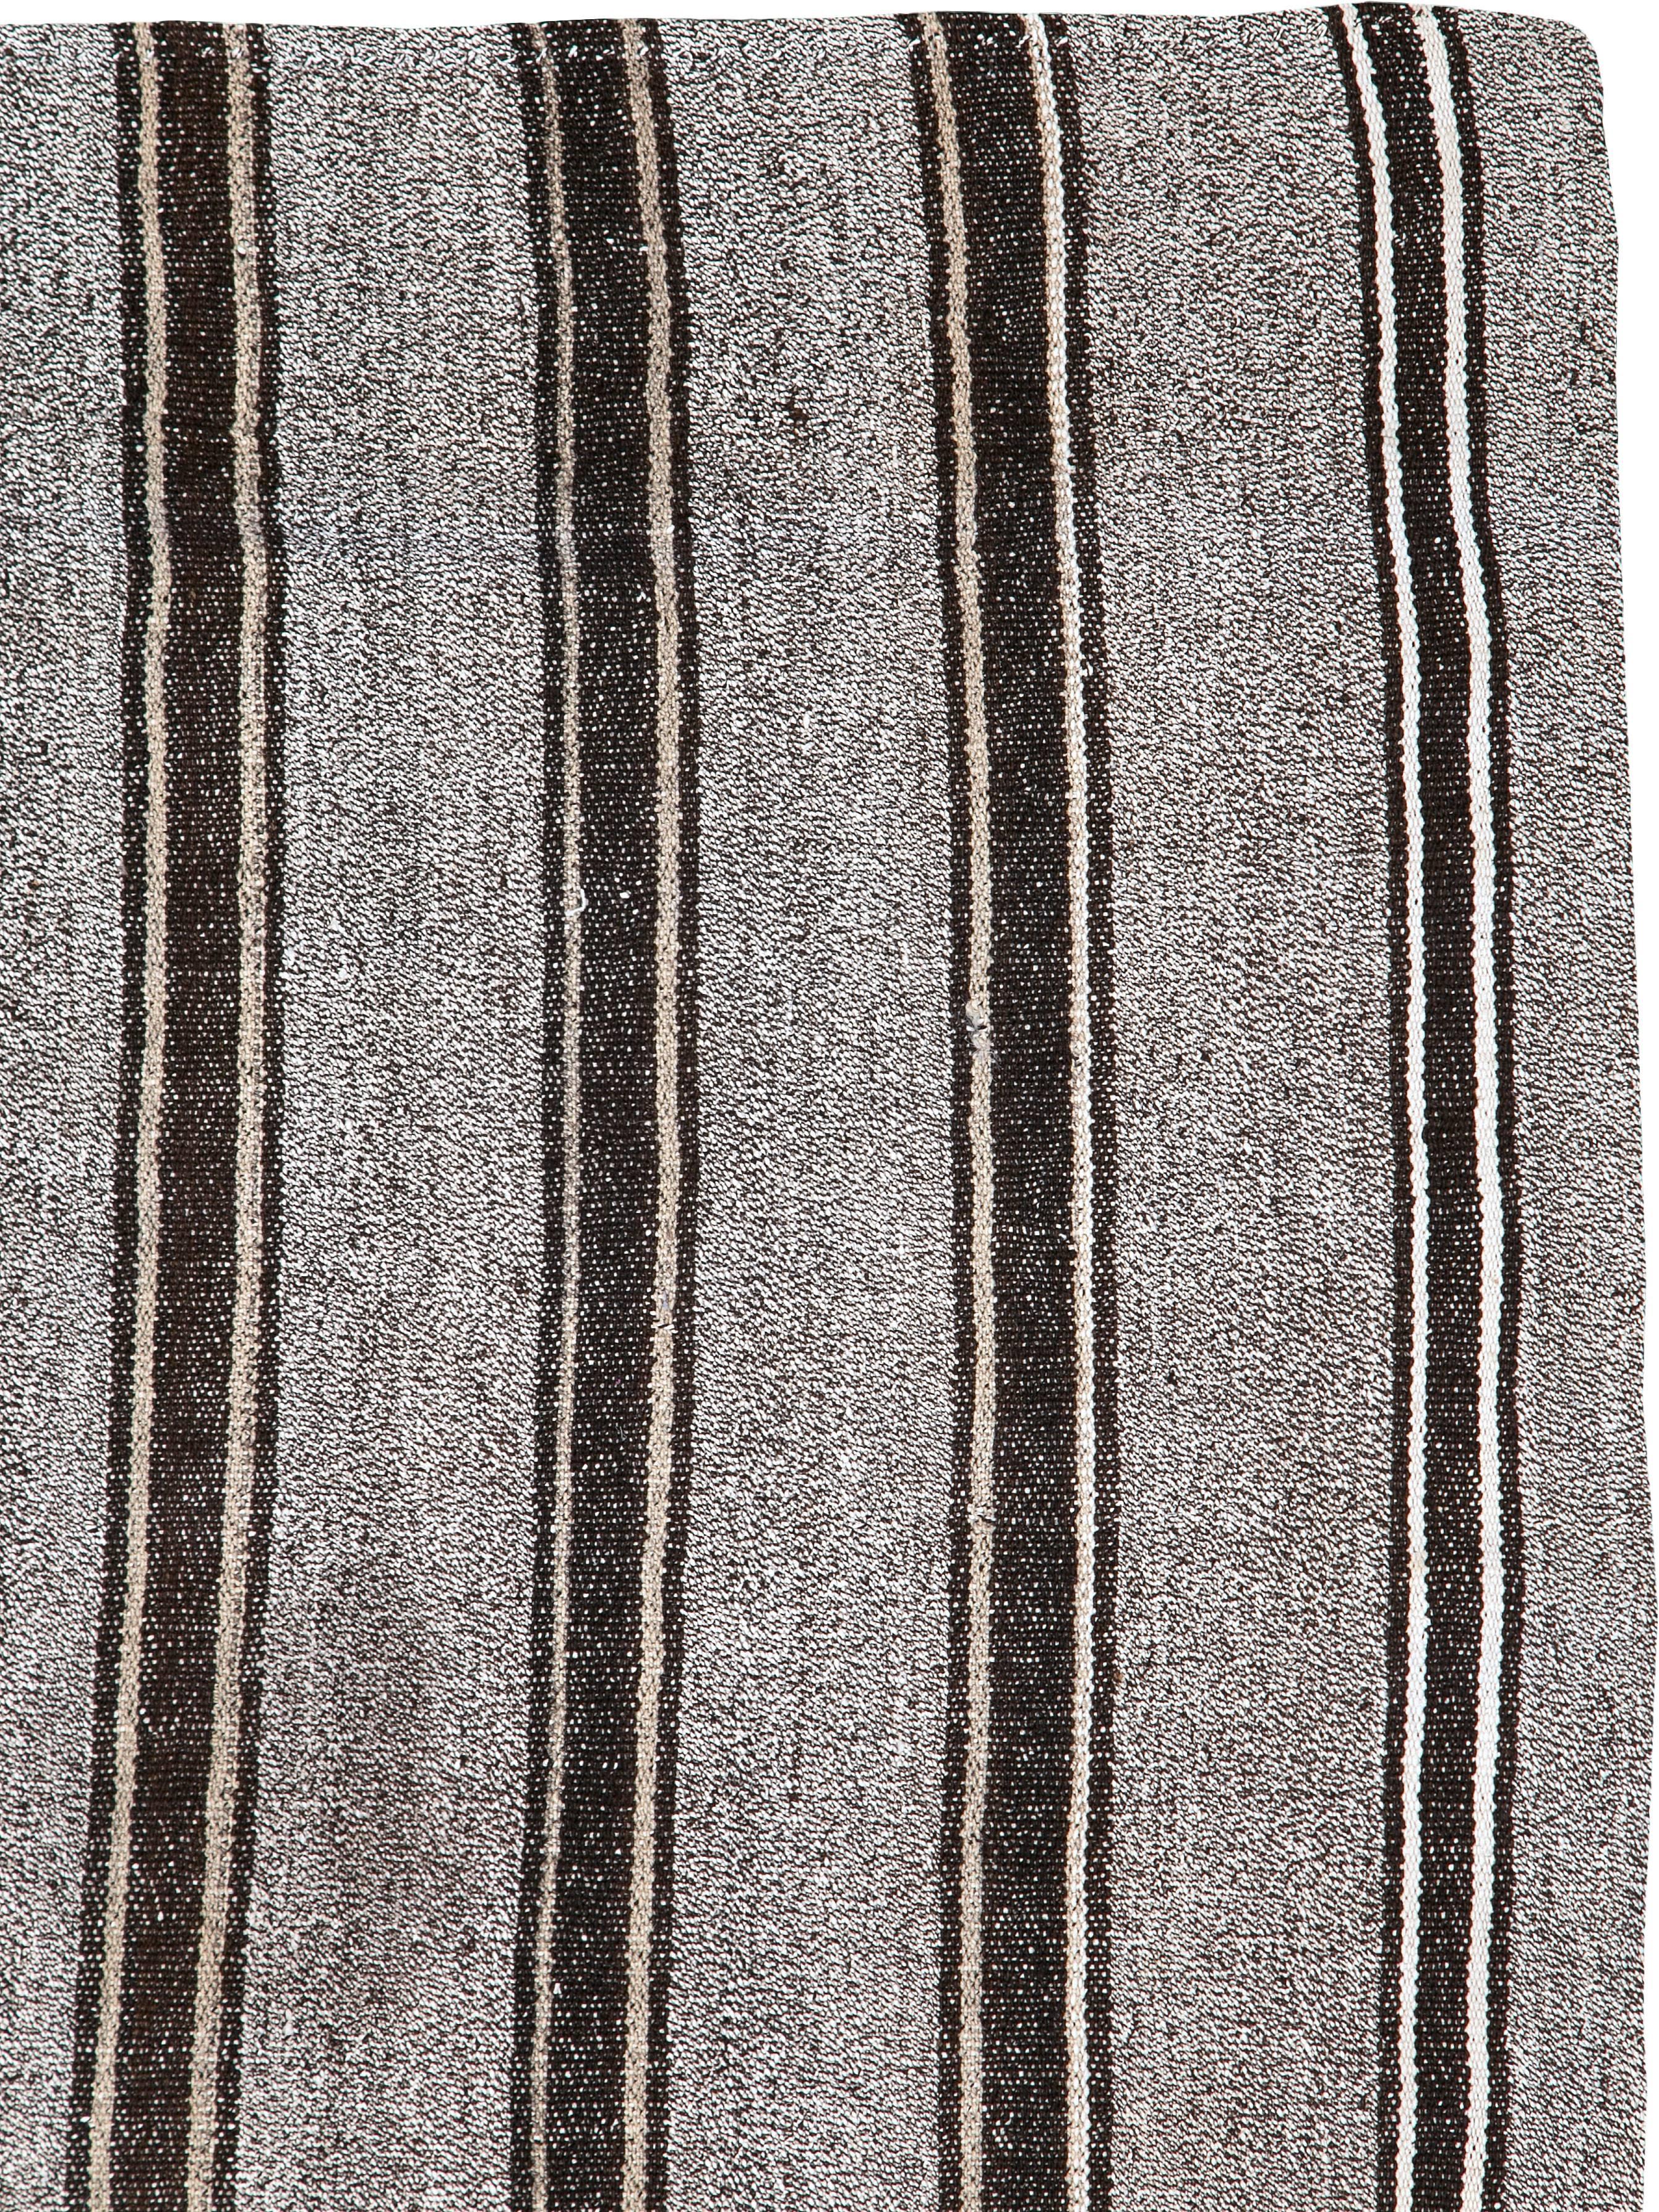 Hand-Woven Vintage Turkish Flat-Weave Kilim Rug For Sale